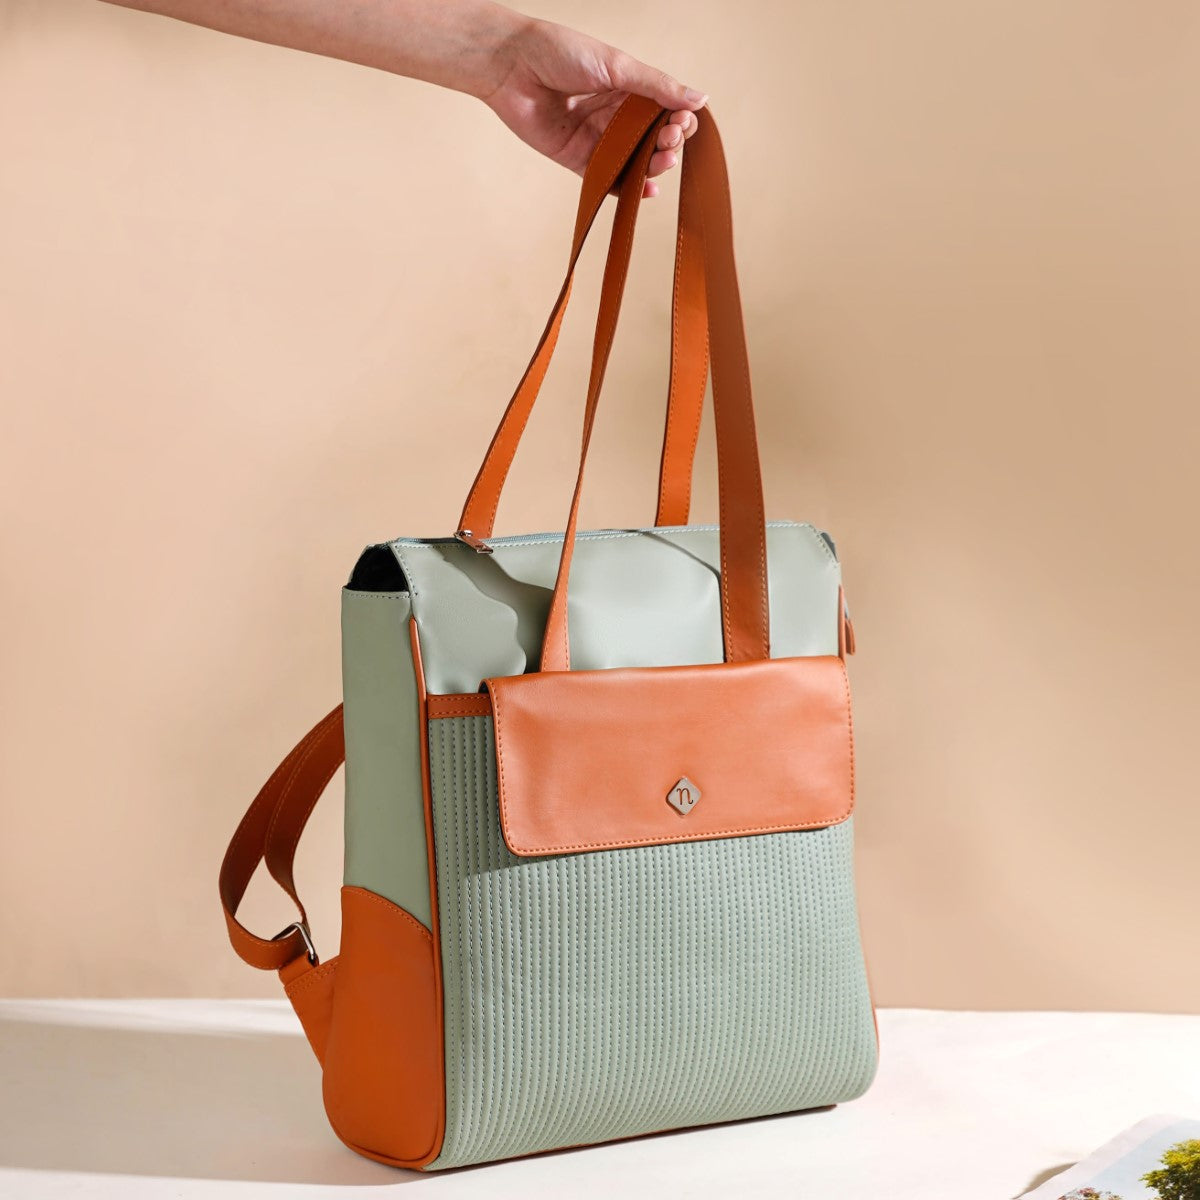 Buy ECOSUSI Tote Bag Convertible Backpack for Women Vegan Leather Handbag  Multifuction Shoulder Bag at Amazon.in